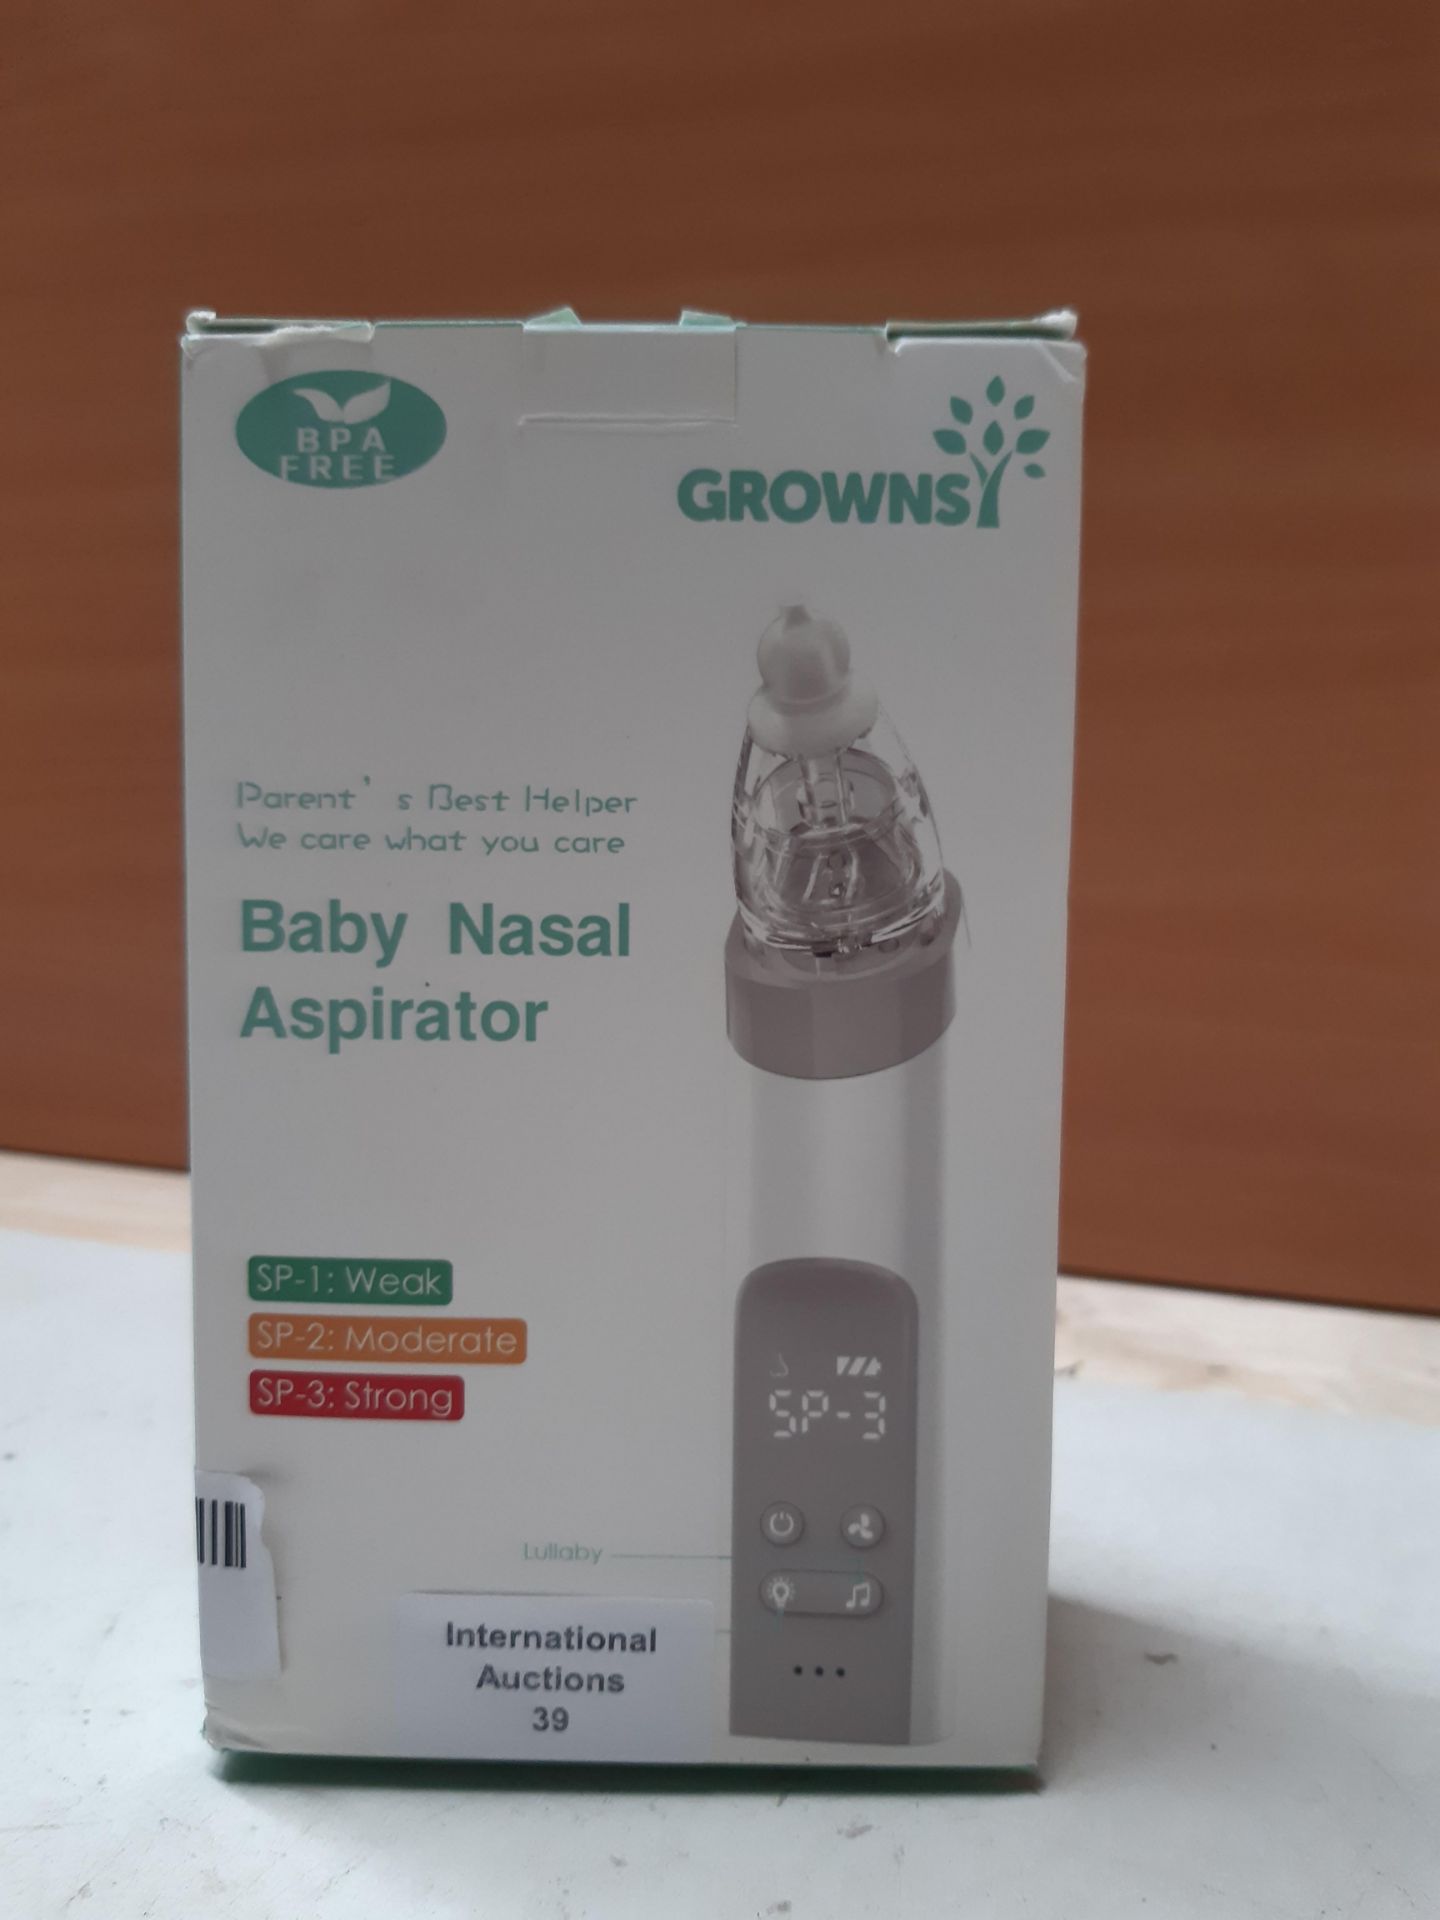 RRP £39.98 Baby Nasal Aspirator - Image 2 of 2